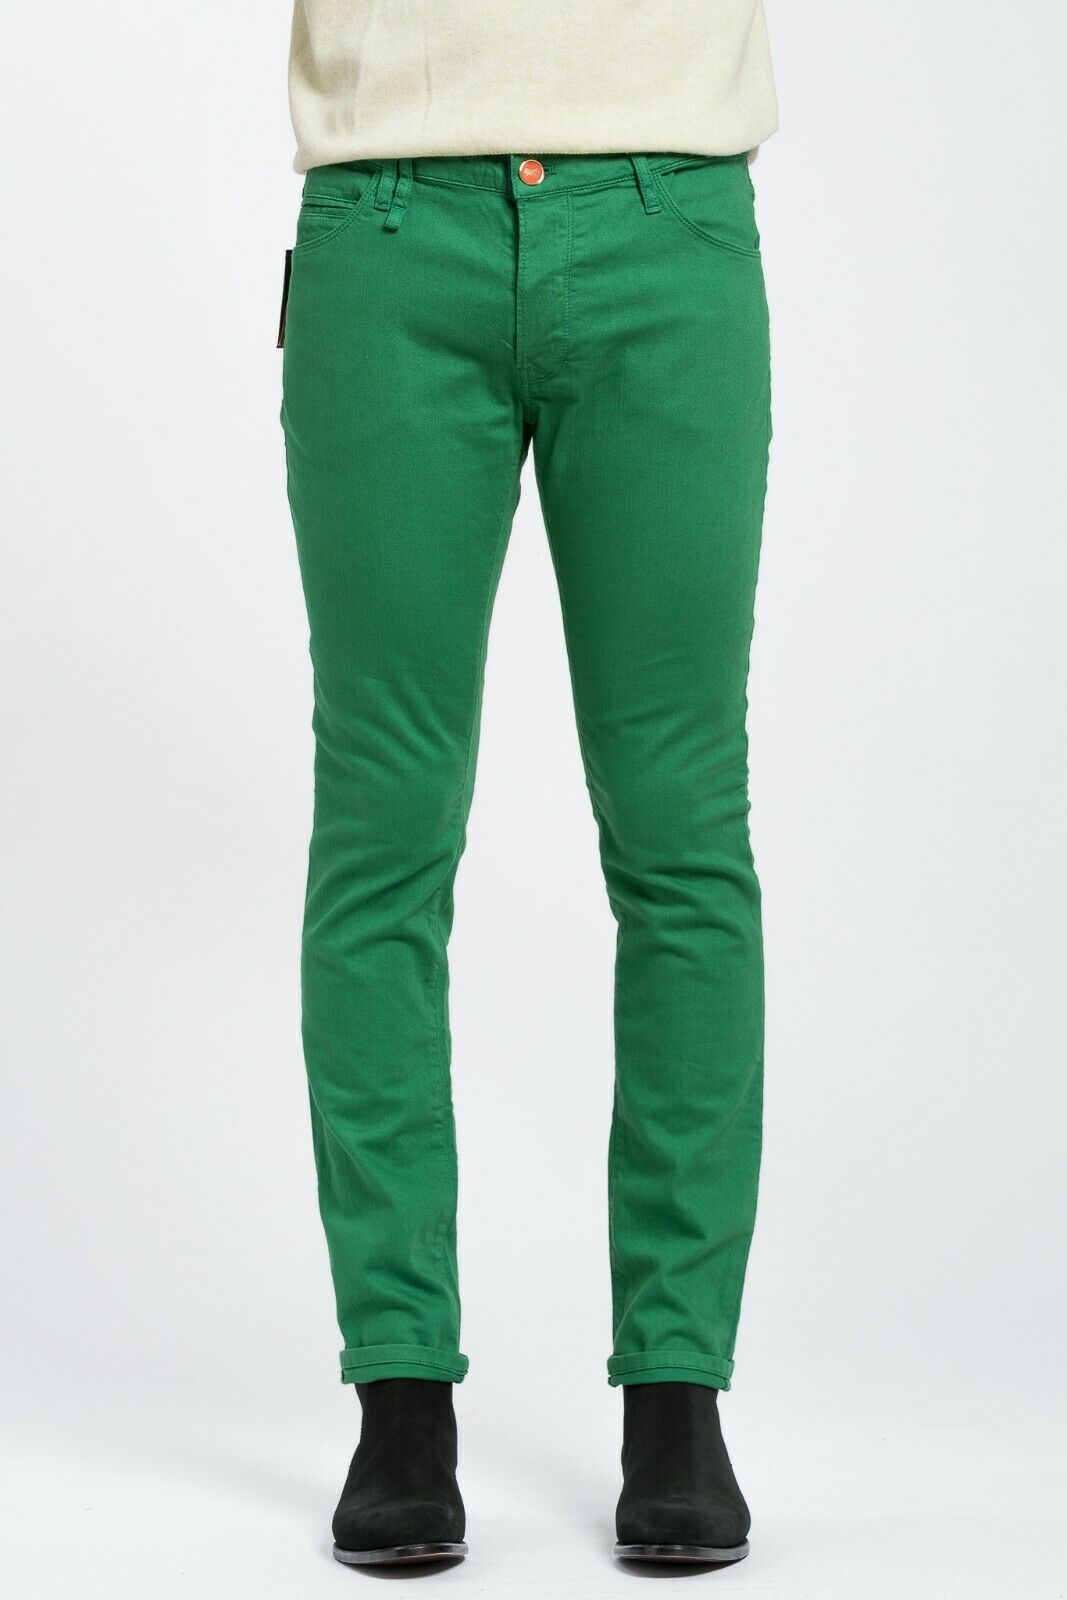 230$ PT05 BRITPOP Green Grass Jeans Trousers Pants Cotton Denim Skinny